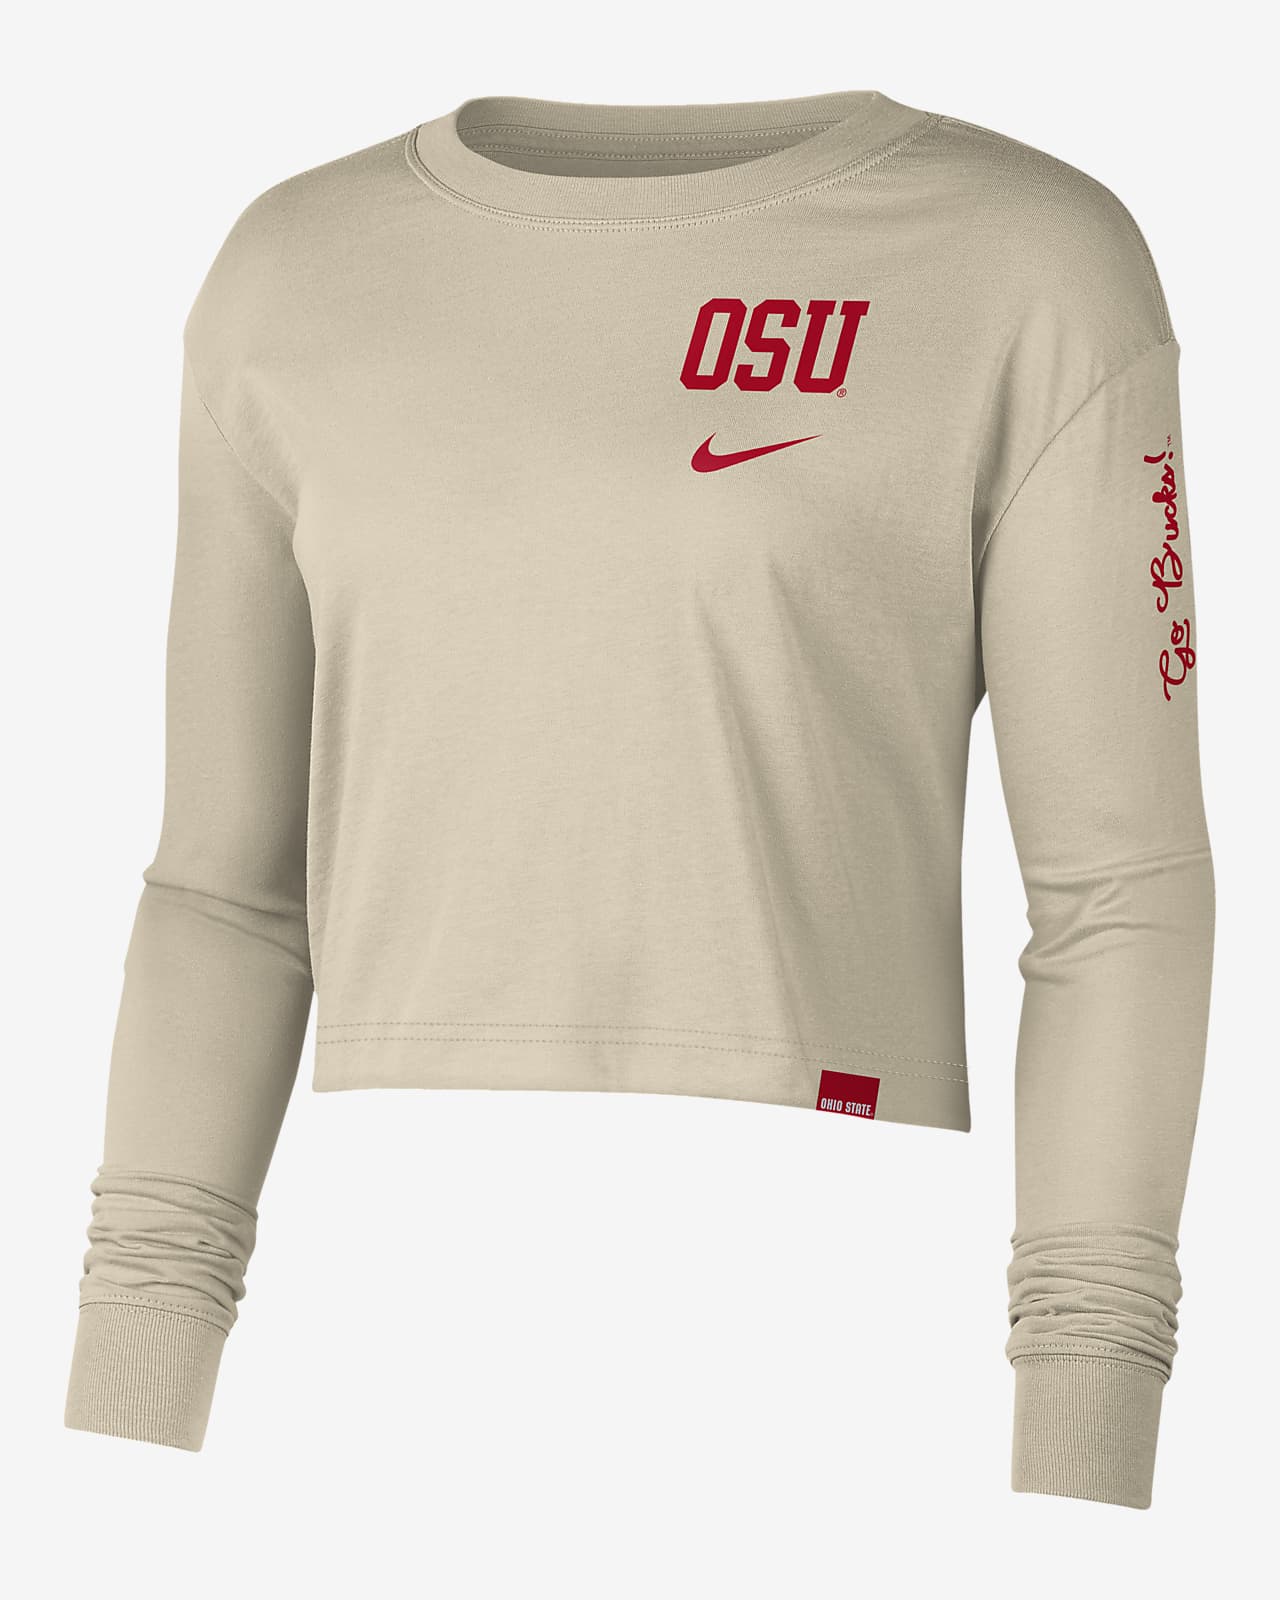 Ohio State Women's Nike College Long-Sleeve T-Shirt.